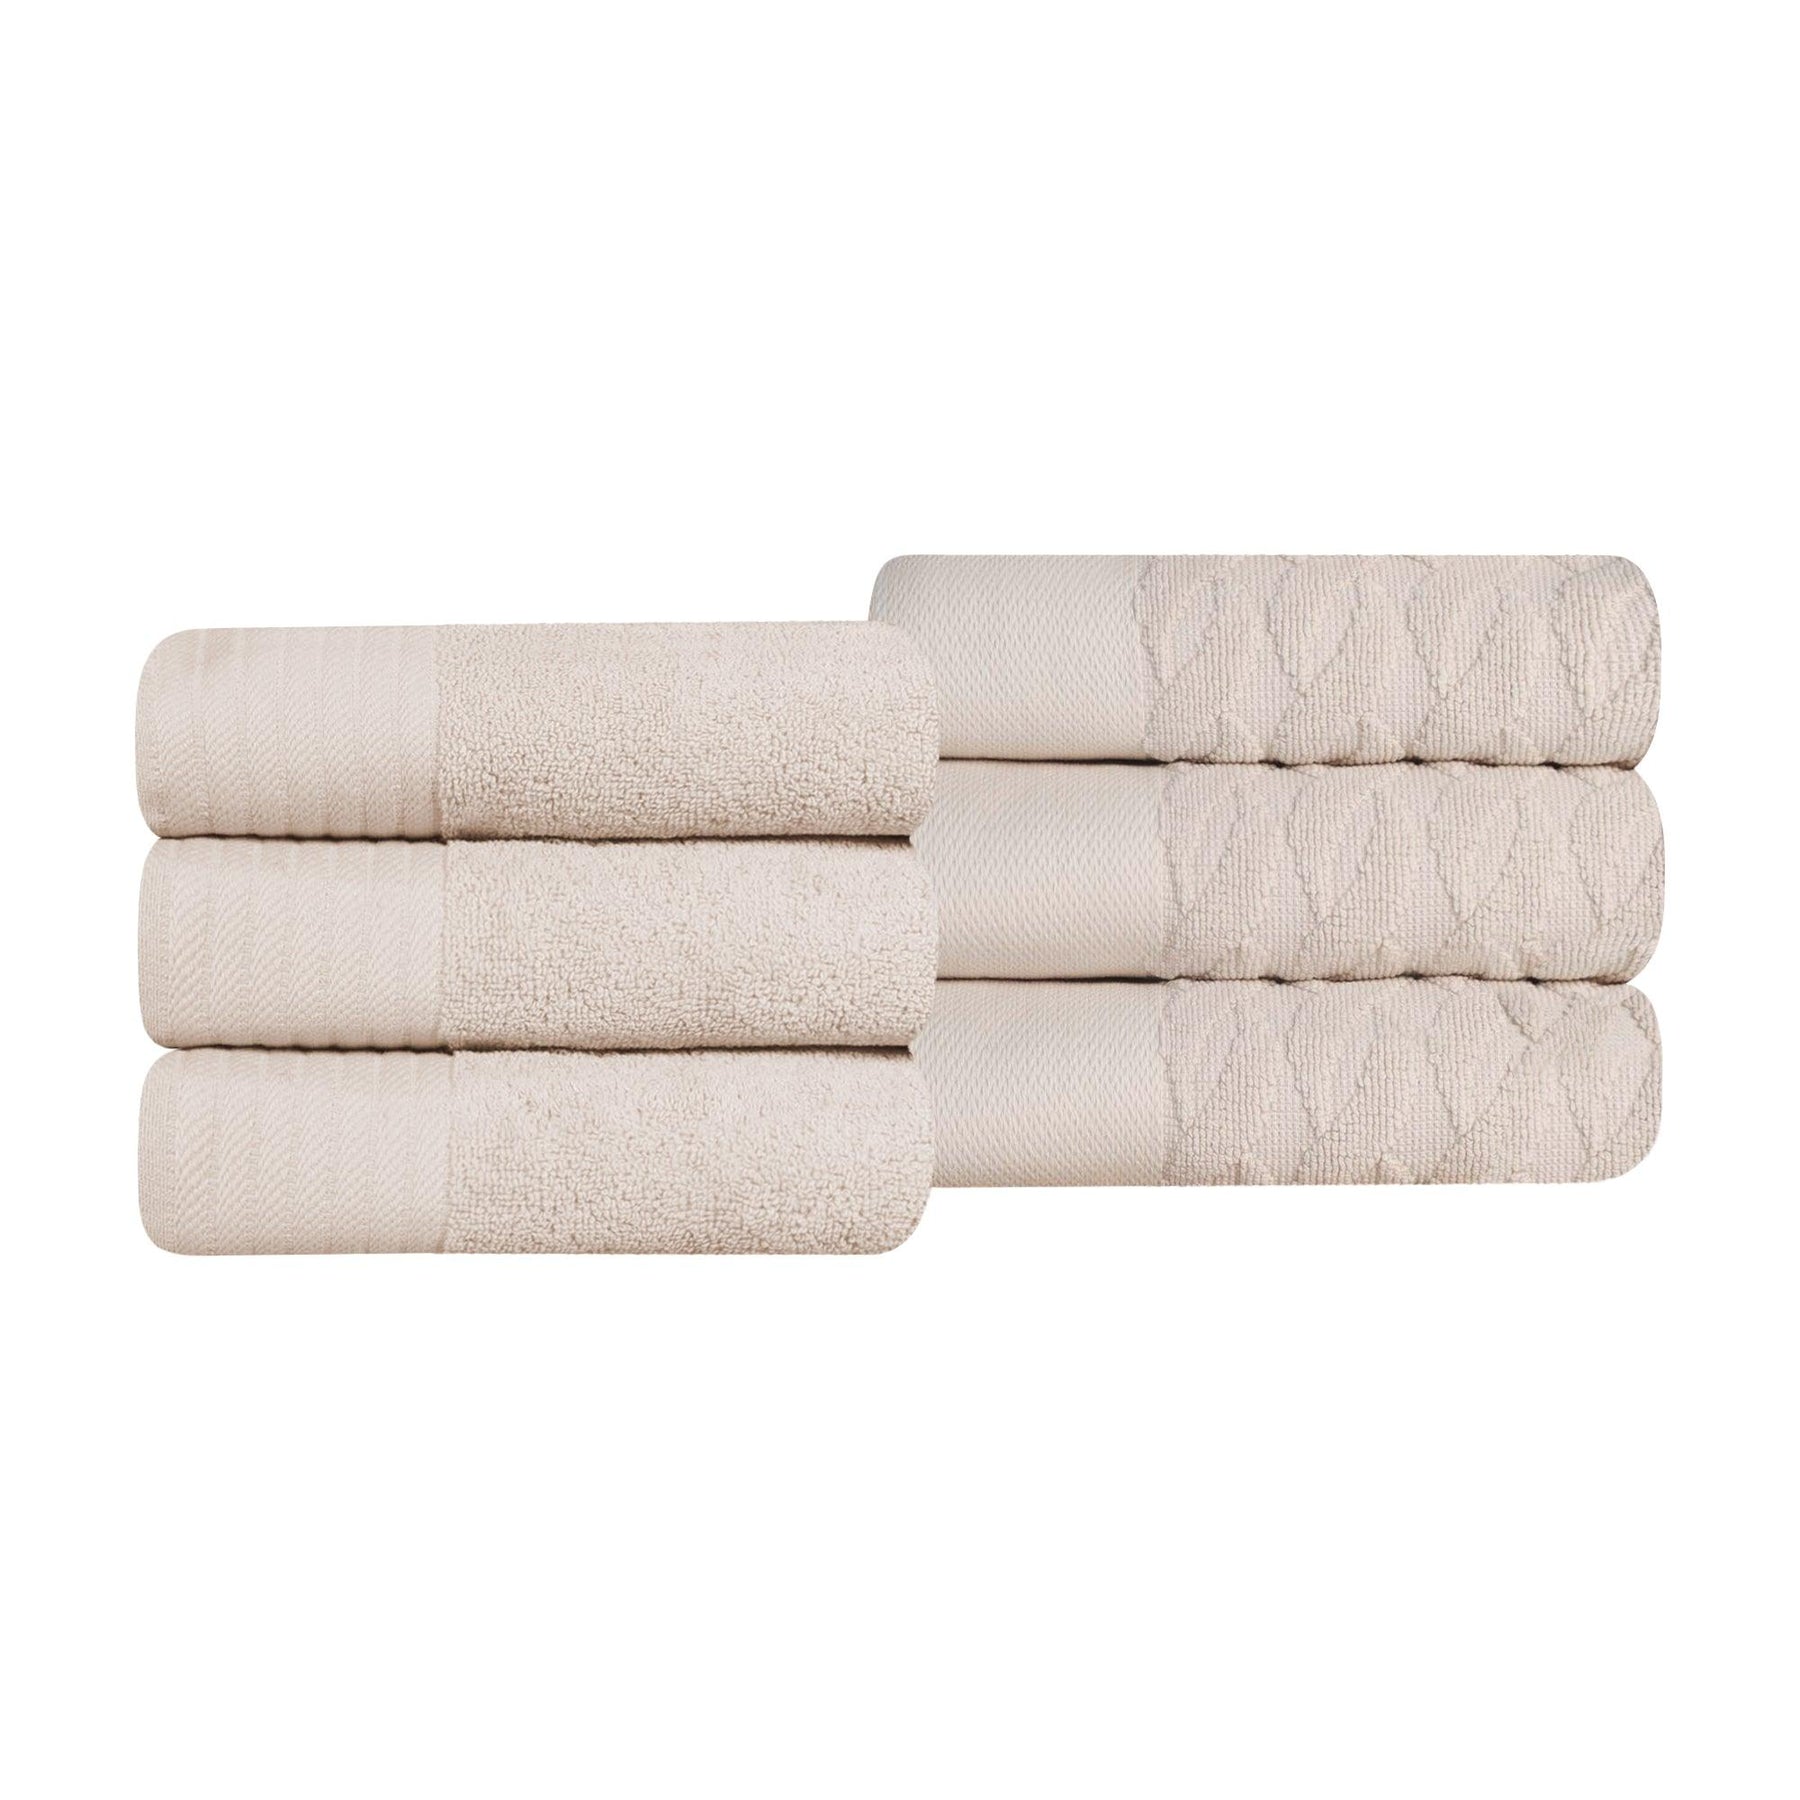 Premium Turkish Cotton Jacquard Herringbone and Solid 6-Piece Hand Towel Set -  Ivory